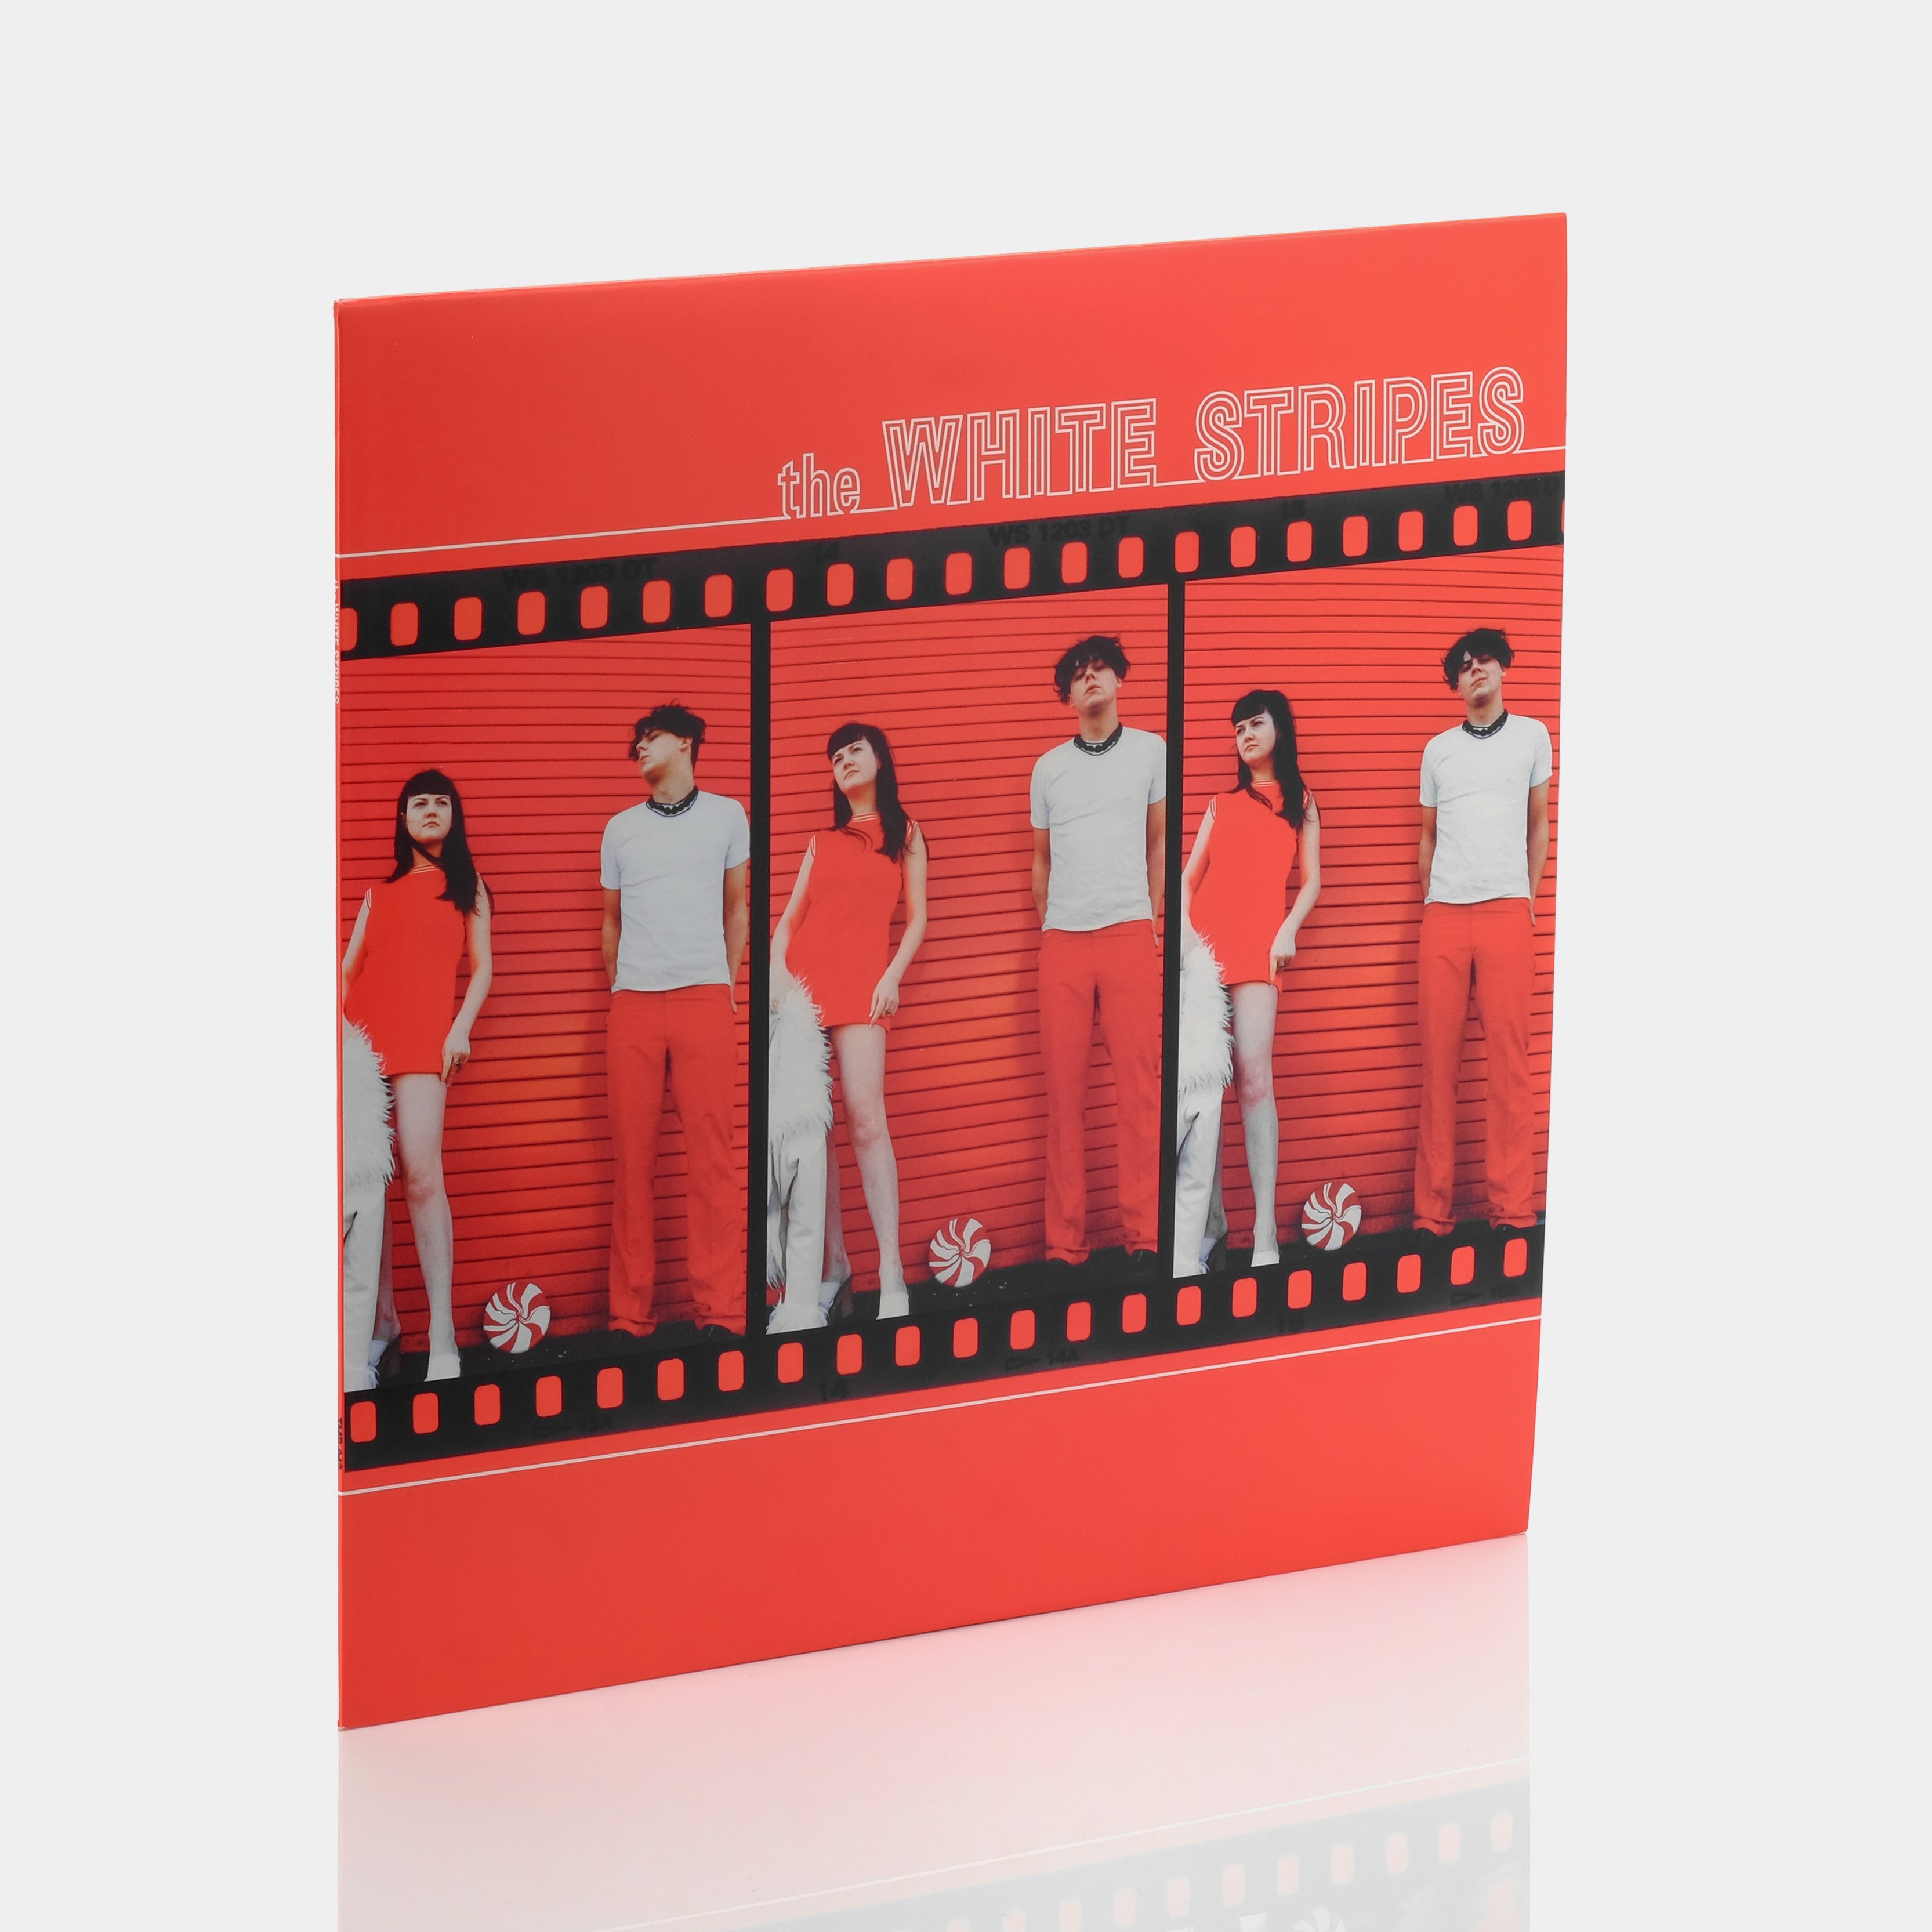 The White Stripes - The White Stripes LP Vinyl Record